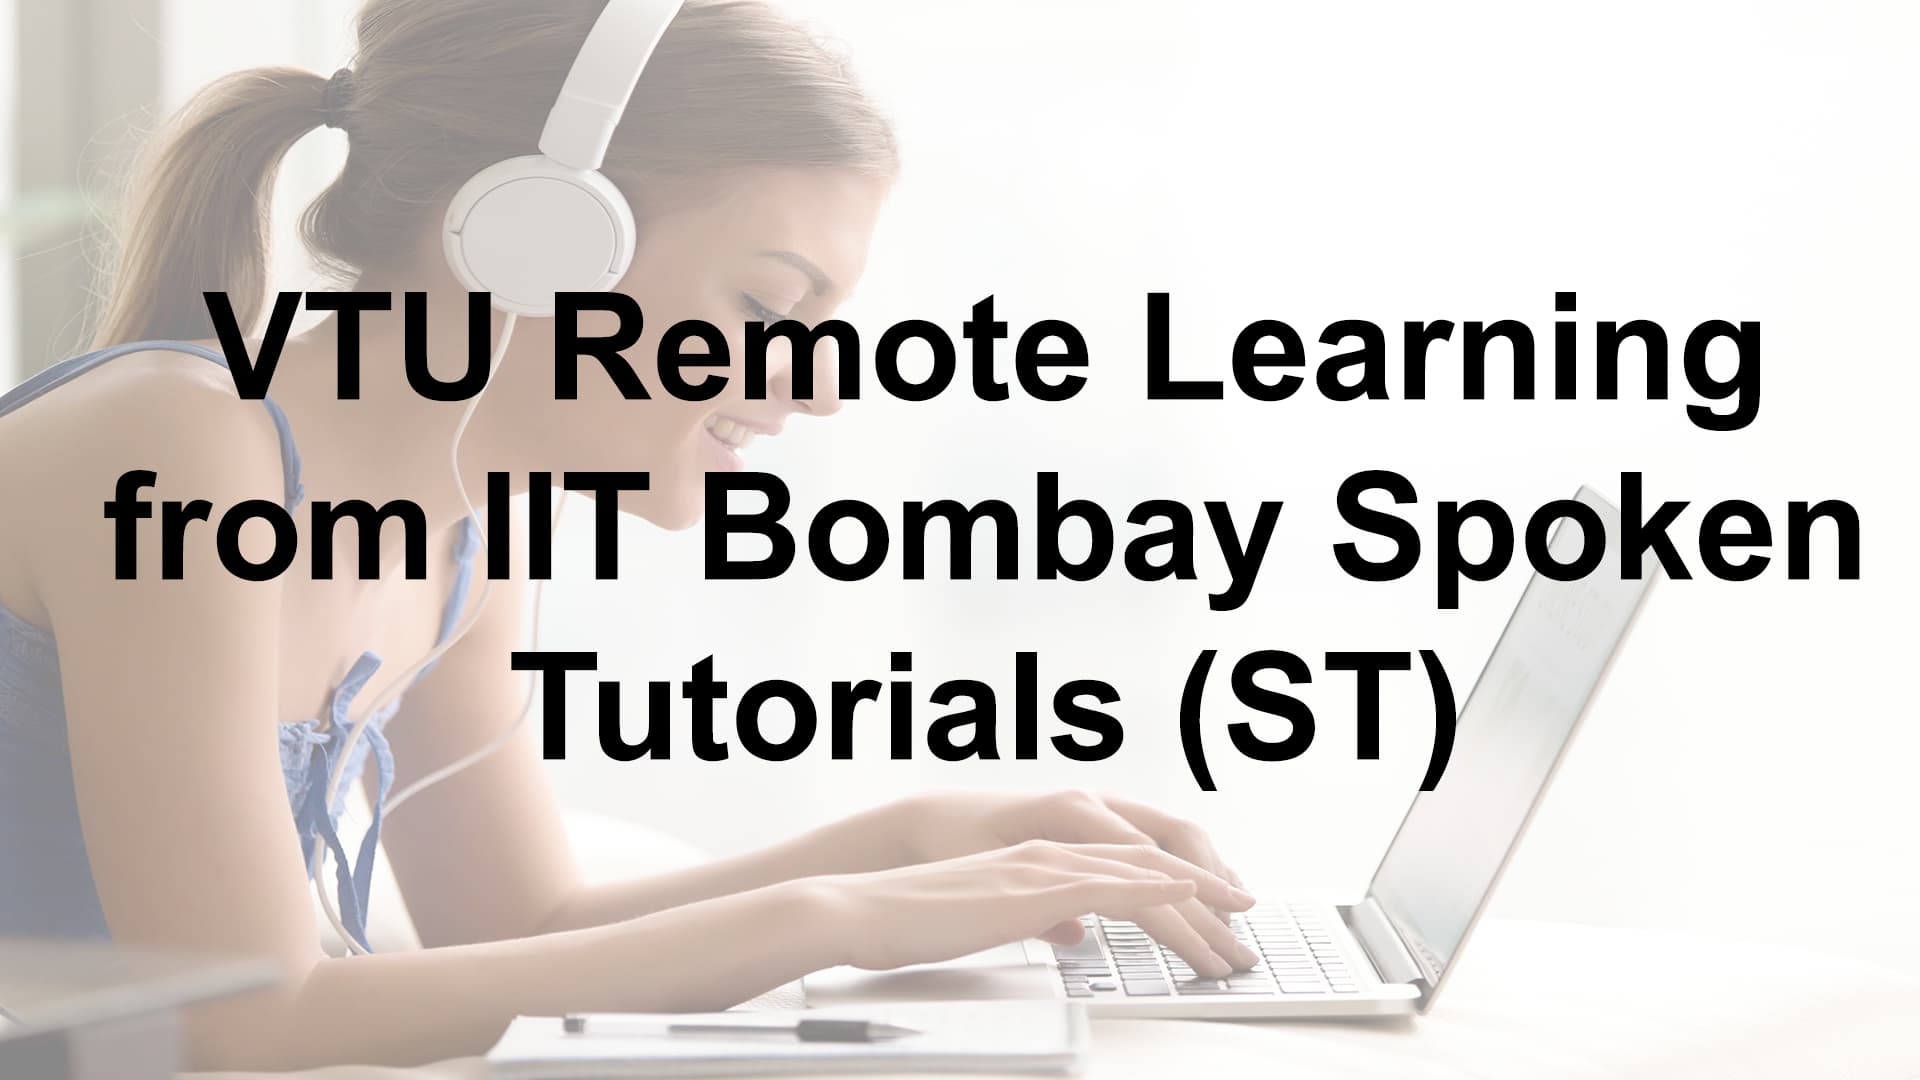 VTU Remote Learning from IIT Bombay Spoken Tutorials